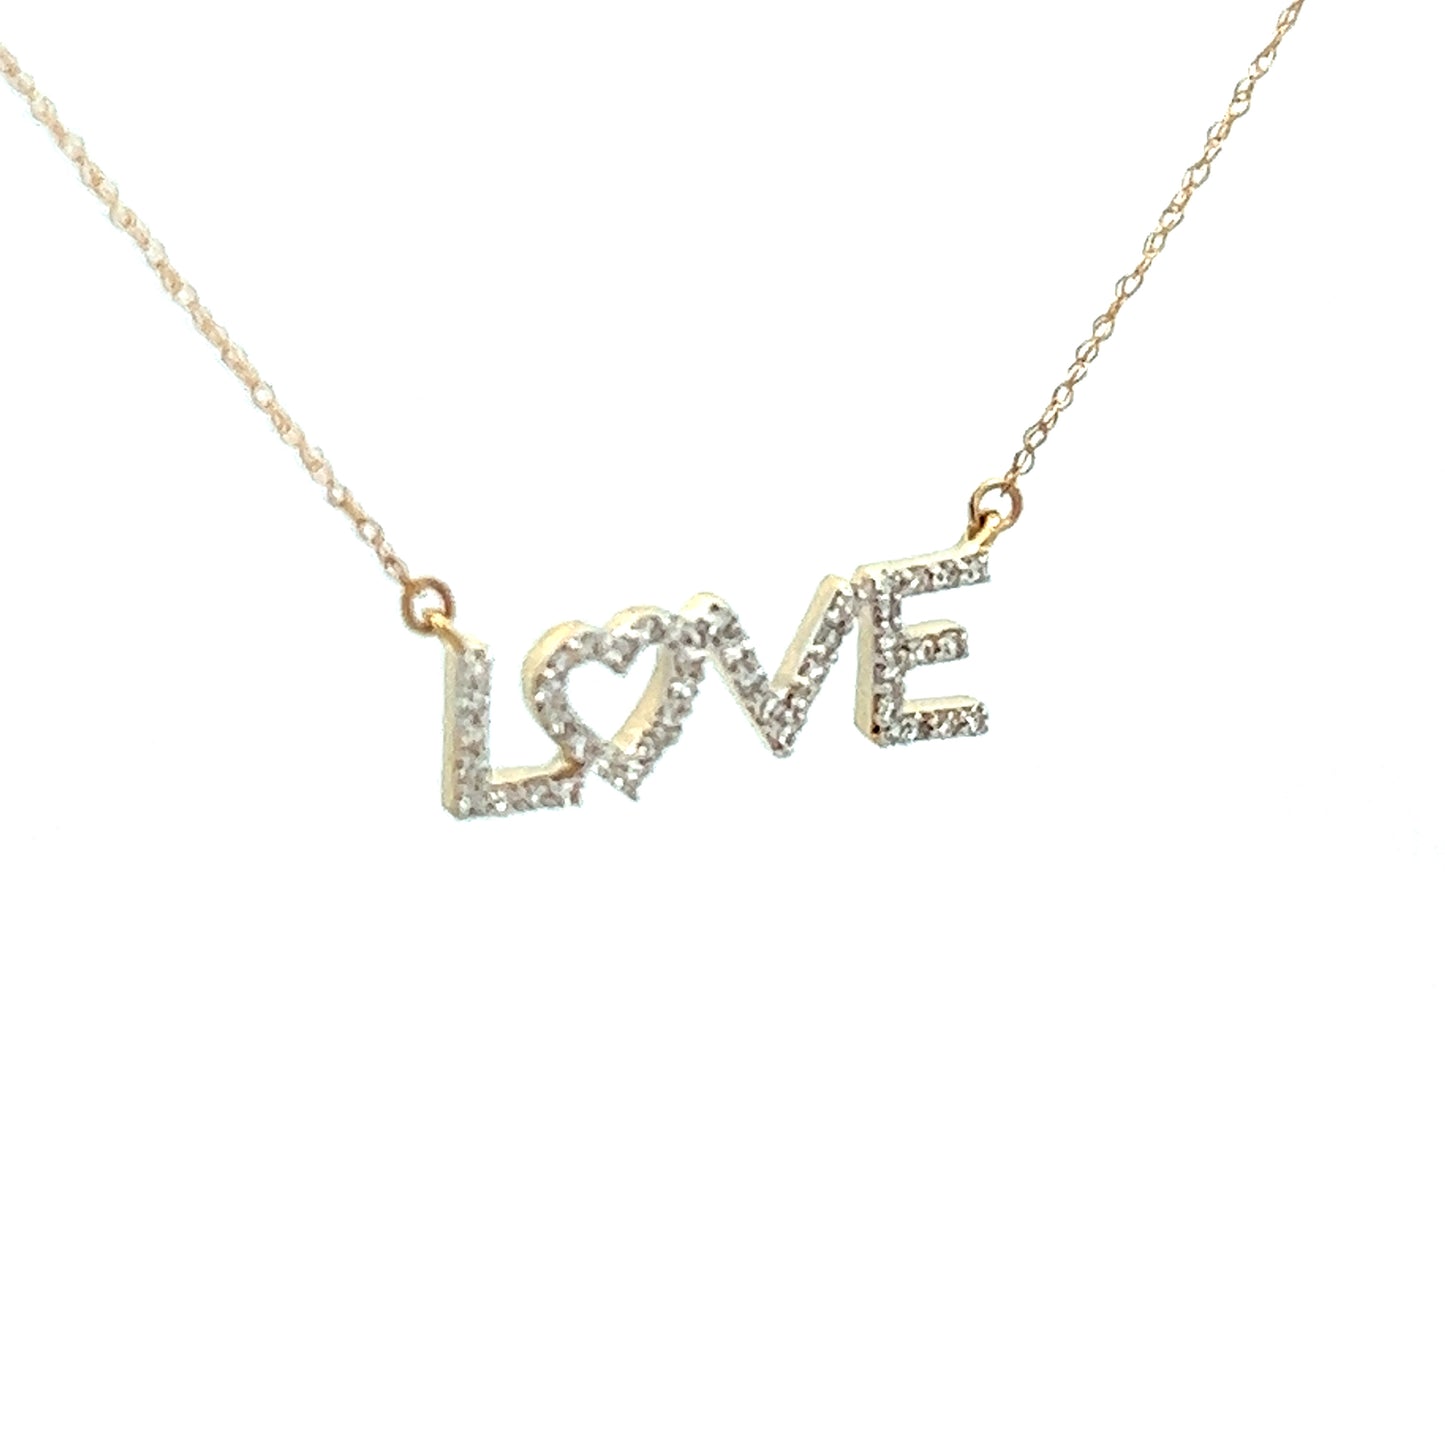 14k gold Love heart pendant with diamonds